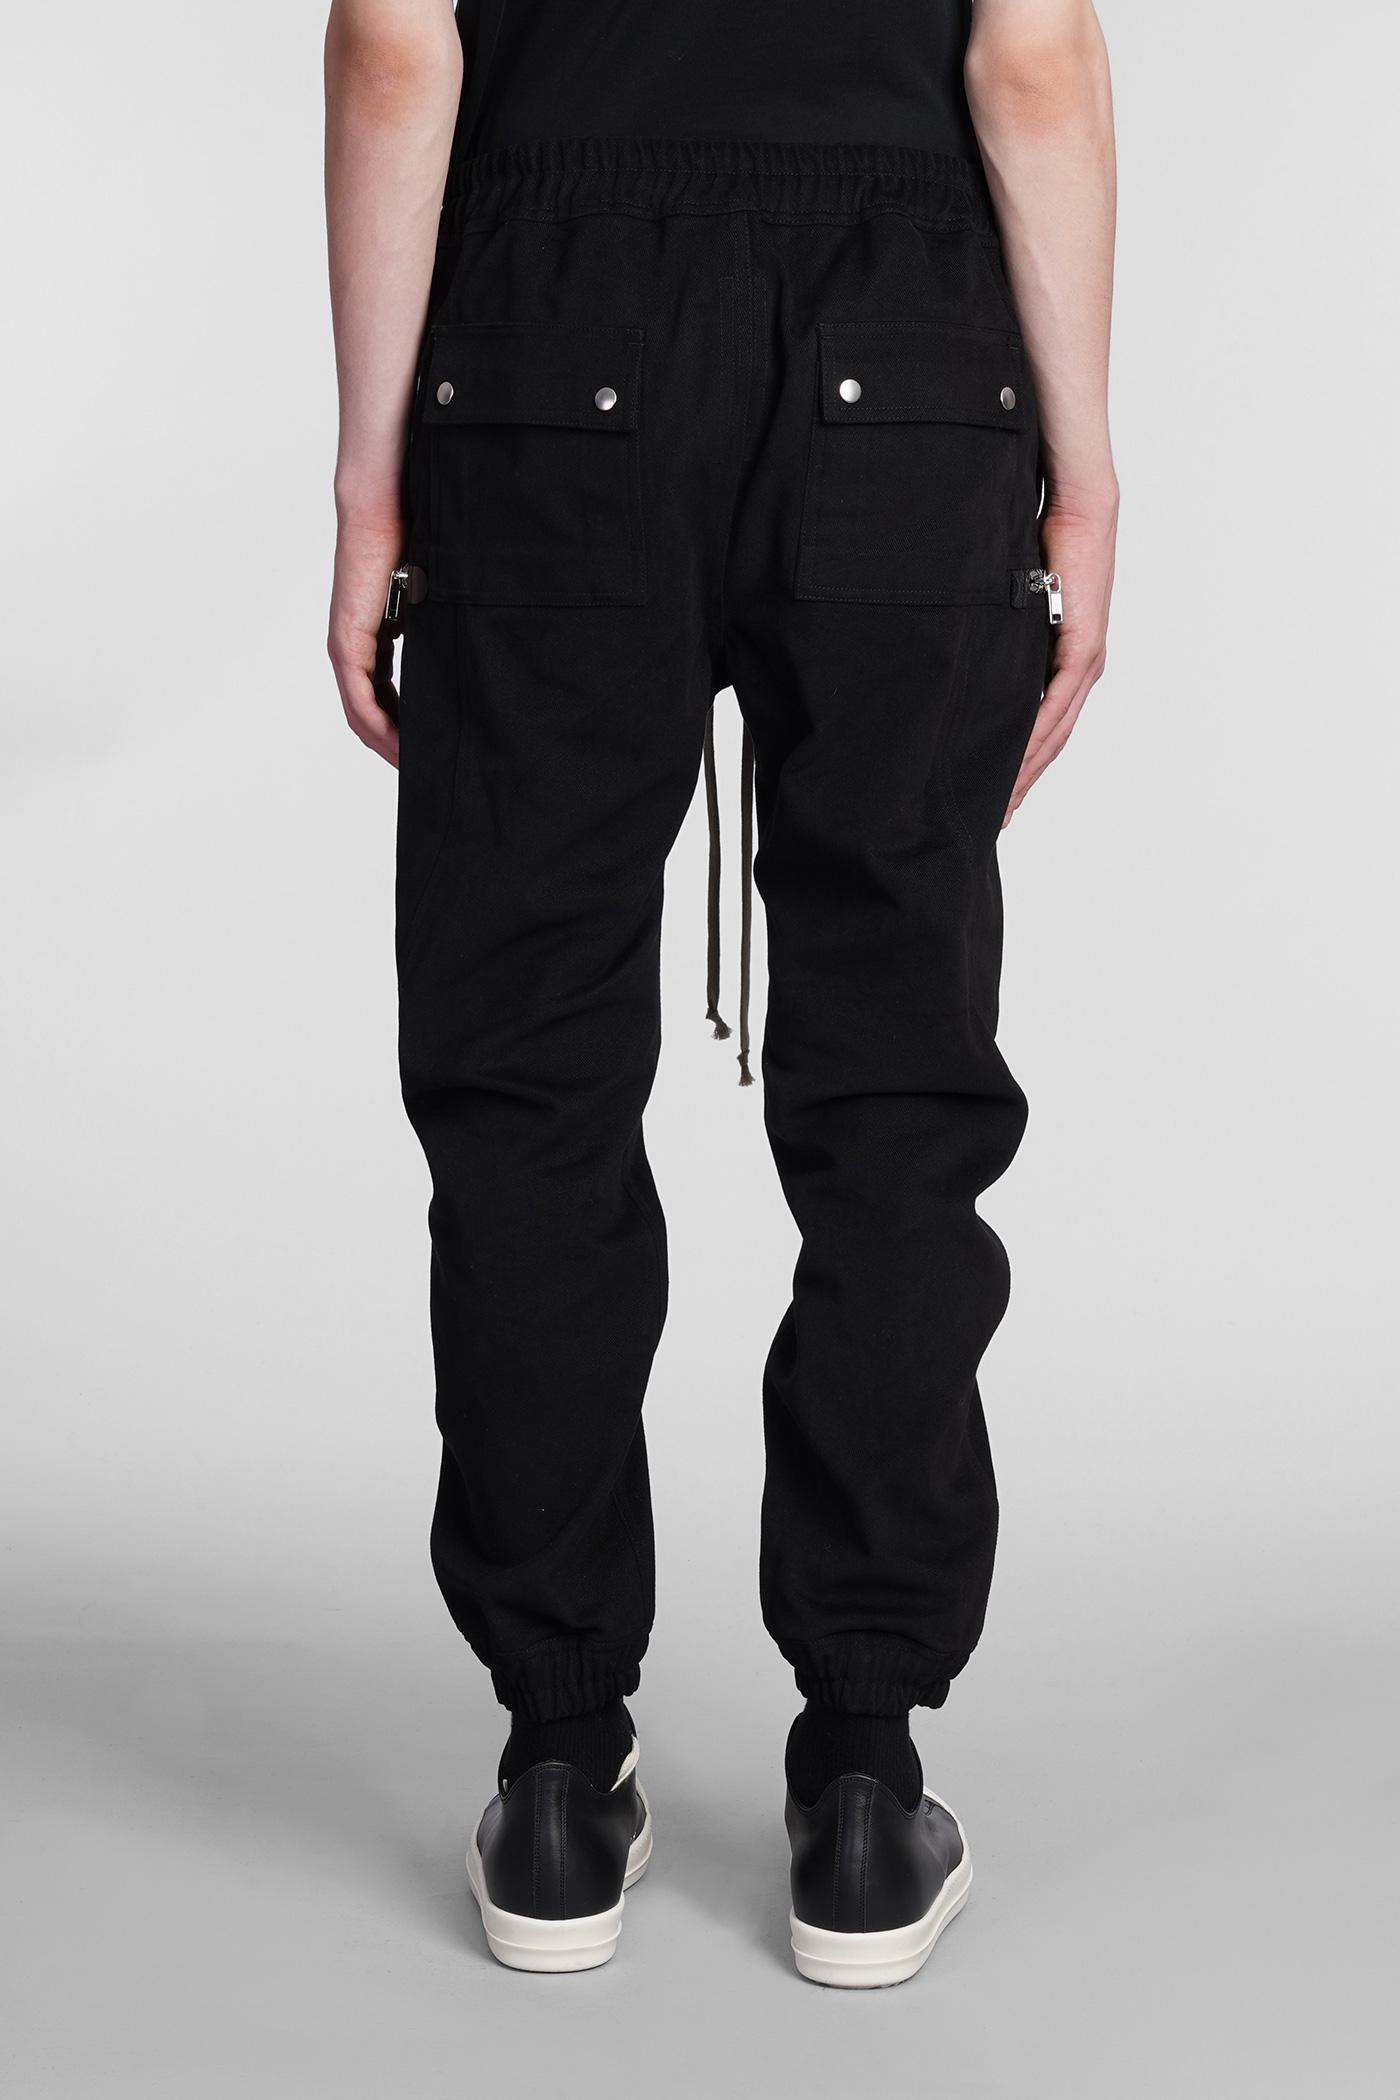 Rick Owens Bauhaus Cargo Pants In Black Cotton for Men